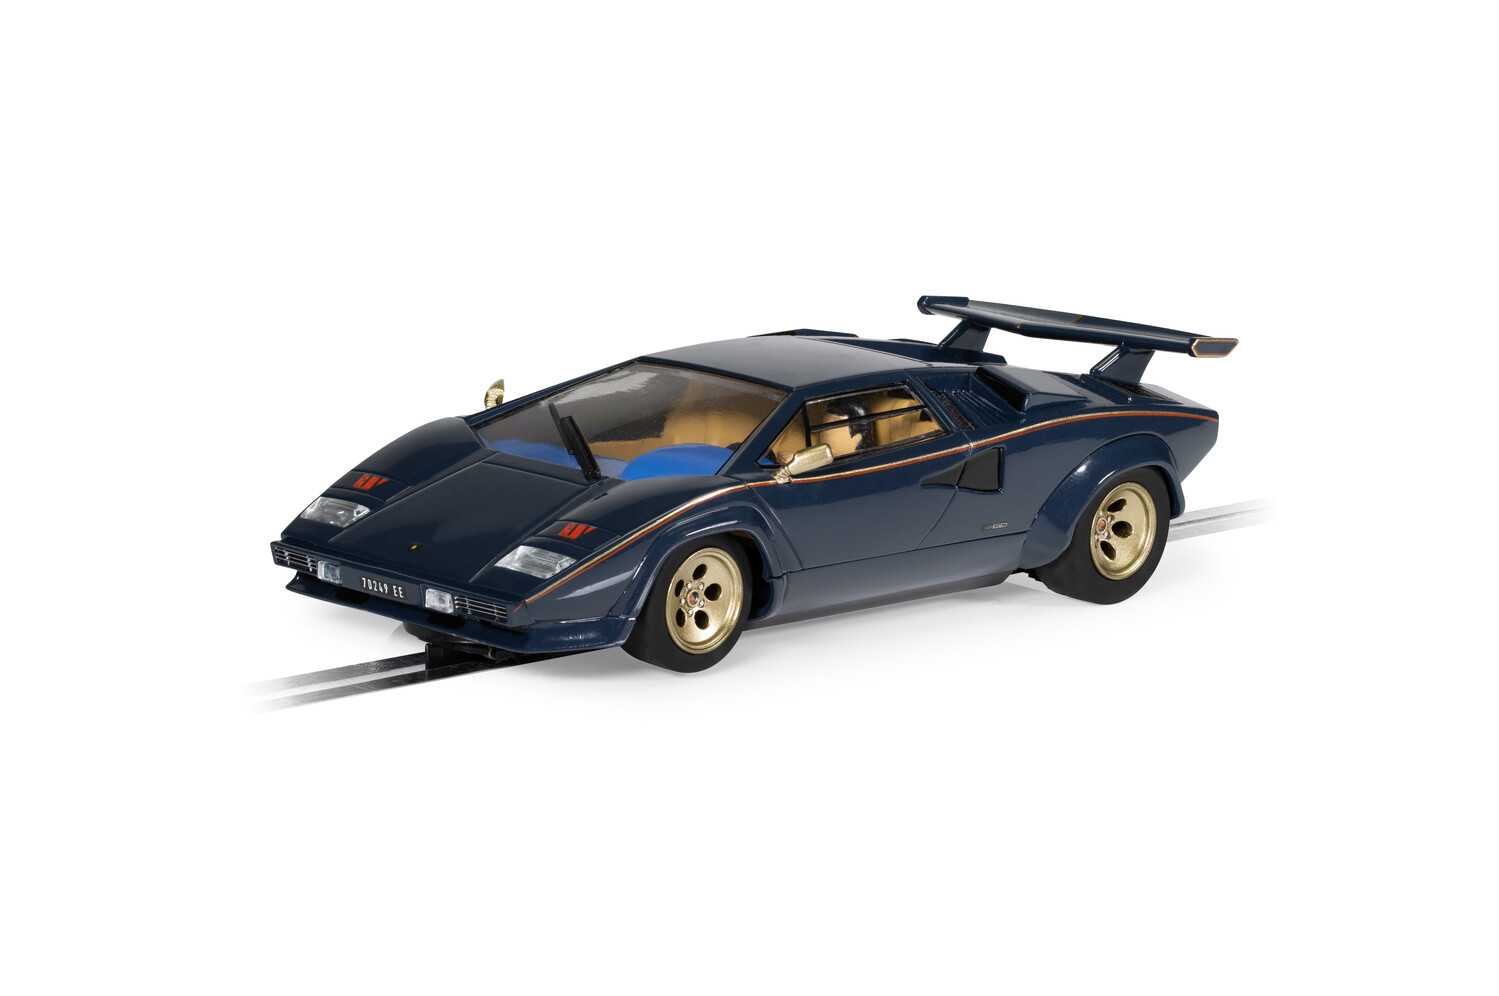 Scalextric Autíčko Street SCALEXTRIC C4411 - Lamborghini Countach - Walter Wolf - Blue And Gold (1:32)